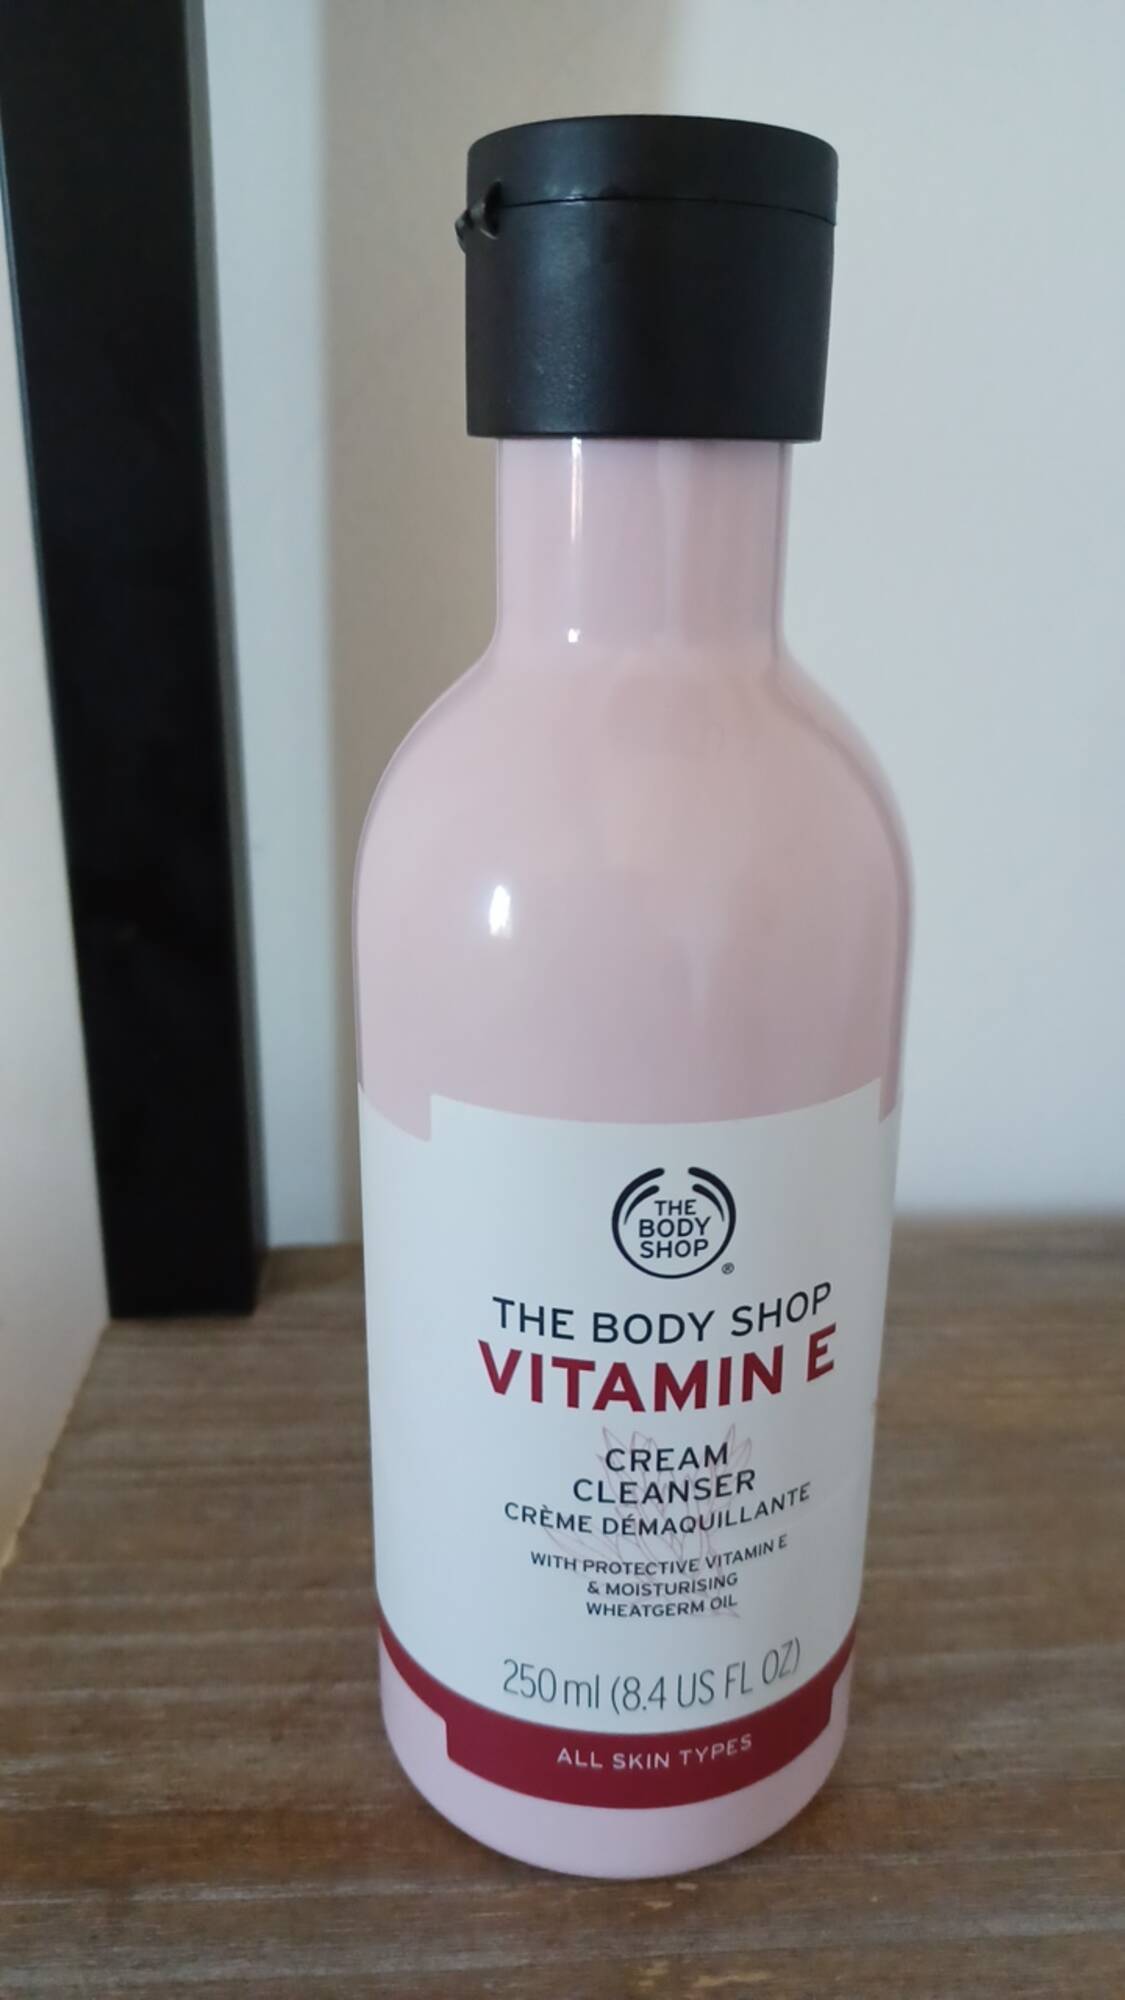 THE BODY SHOP - Vitamin E - Crème démaquillante